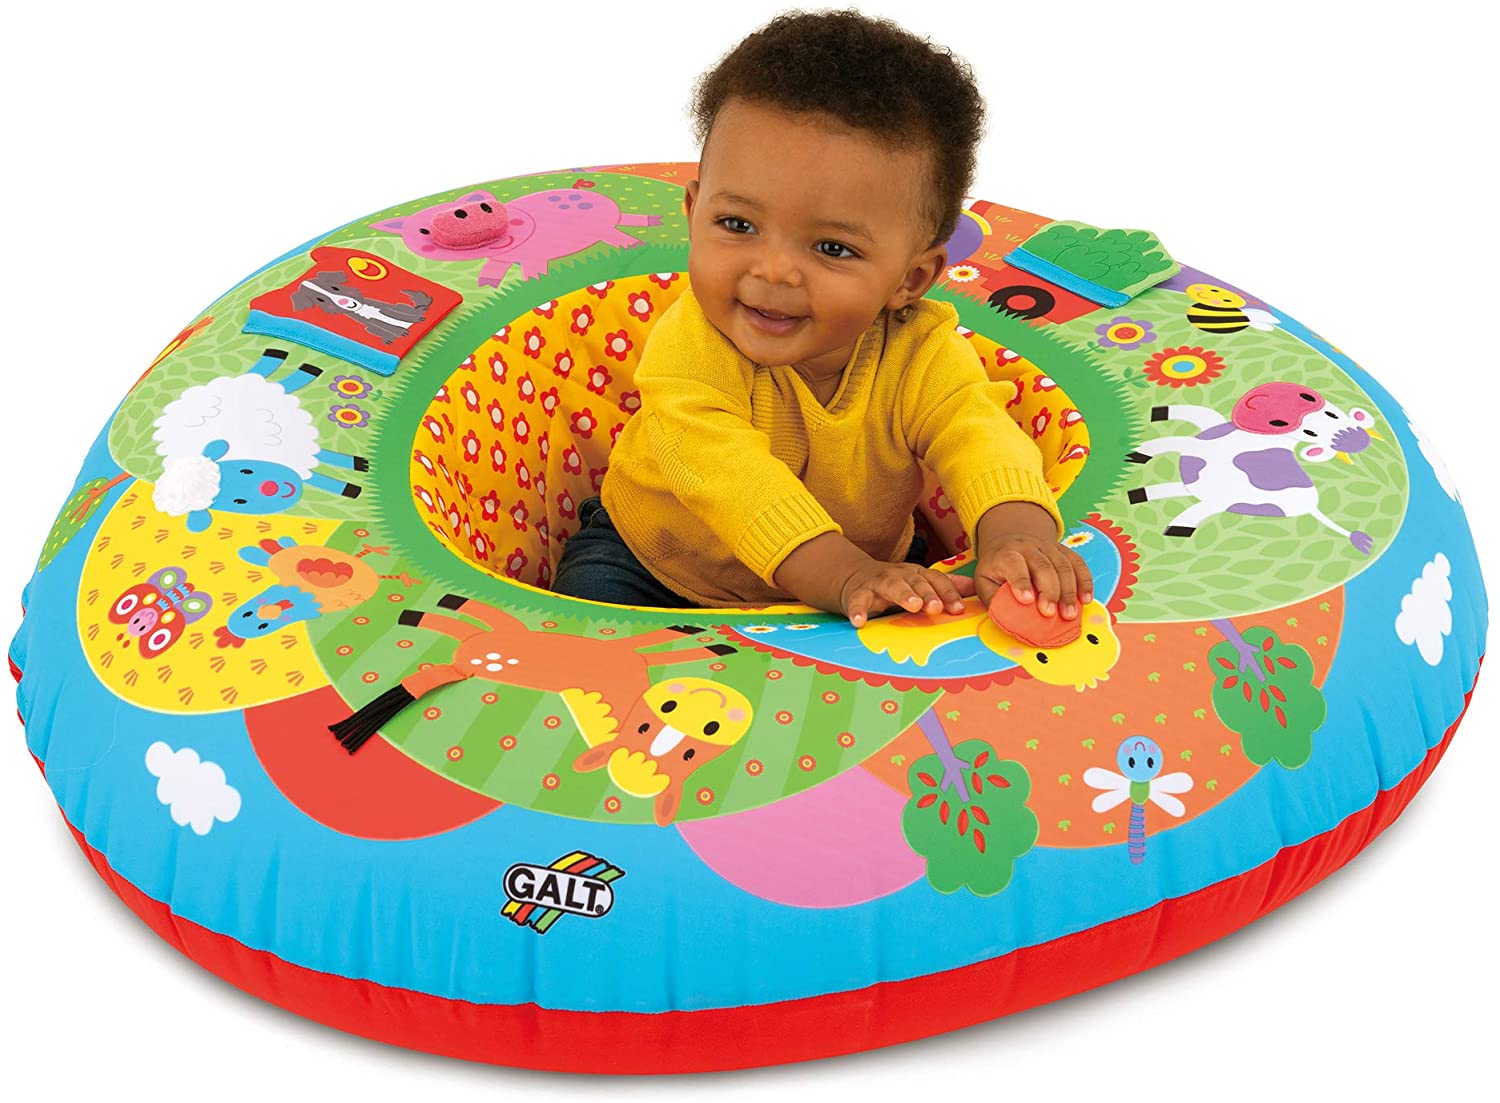 Galt Toys, Playnest - Farm, Baby Activity Center & Floor Seat, Multicolor - image 3 of 4